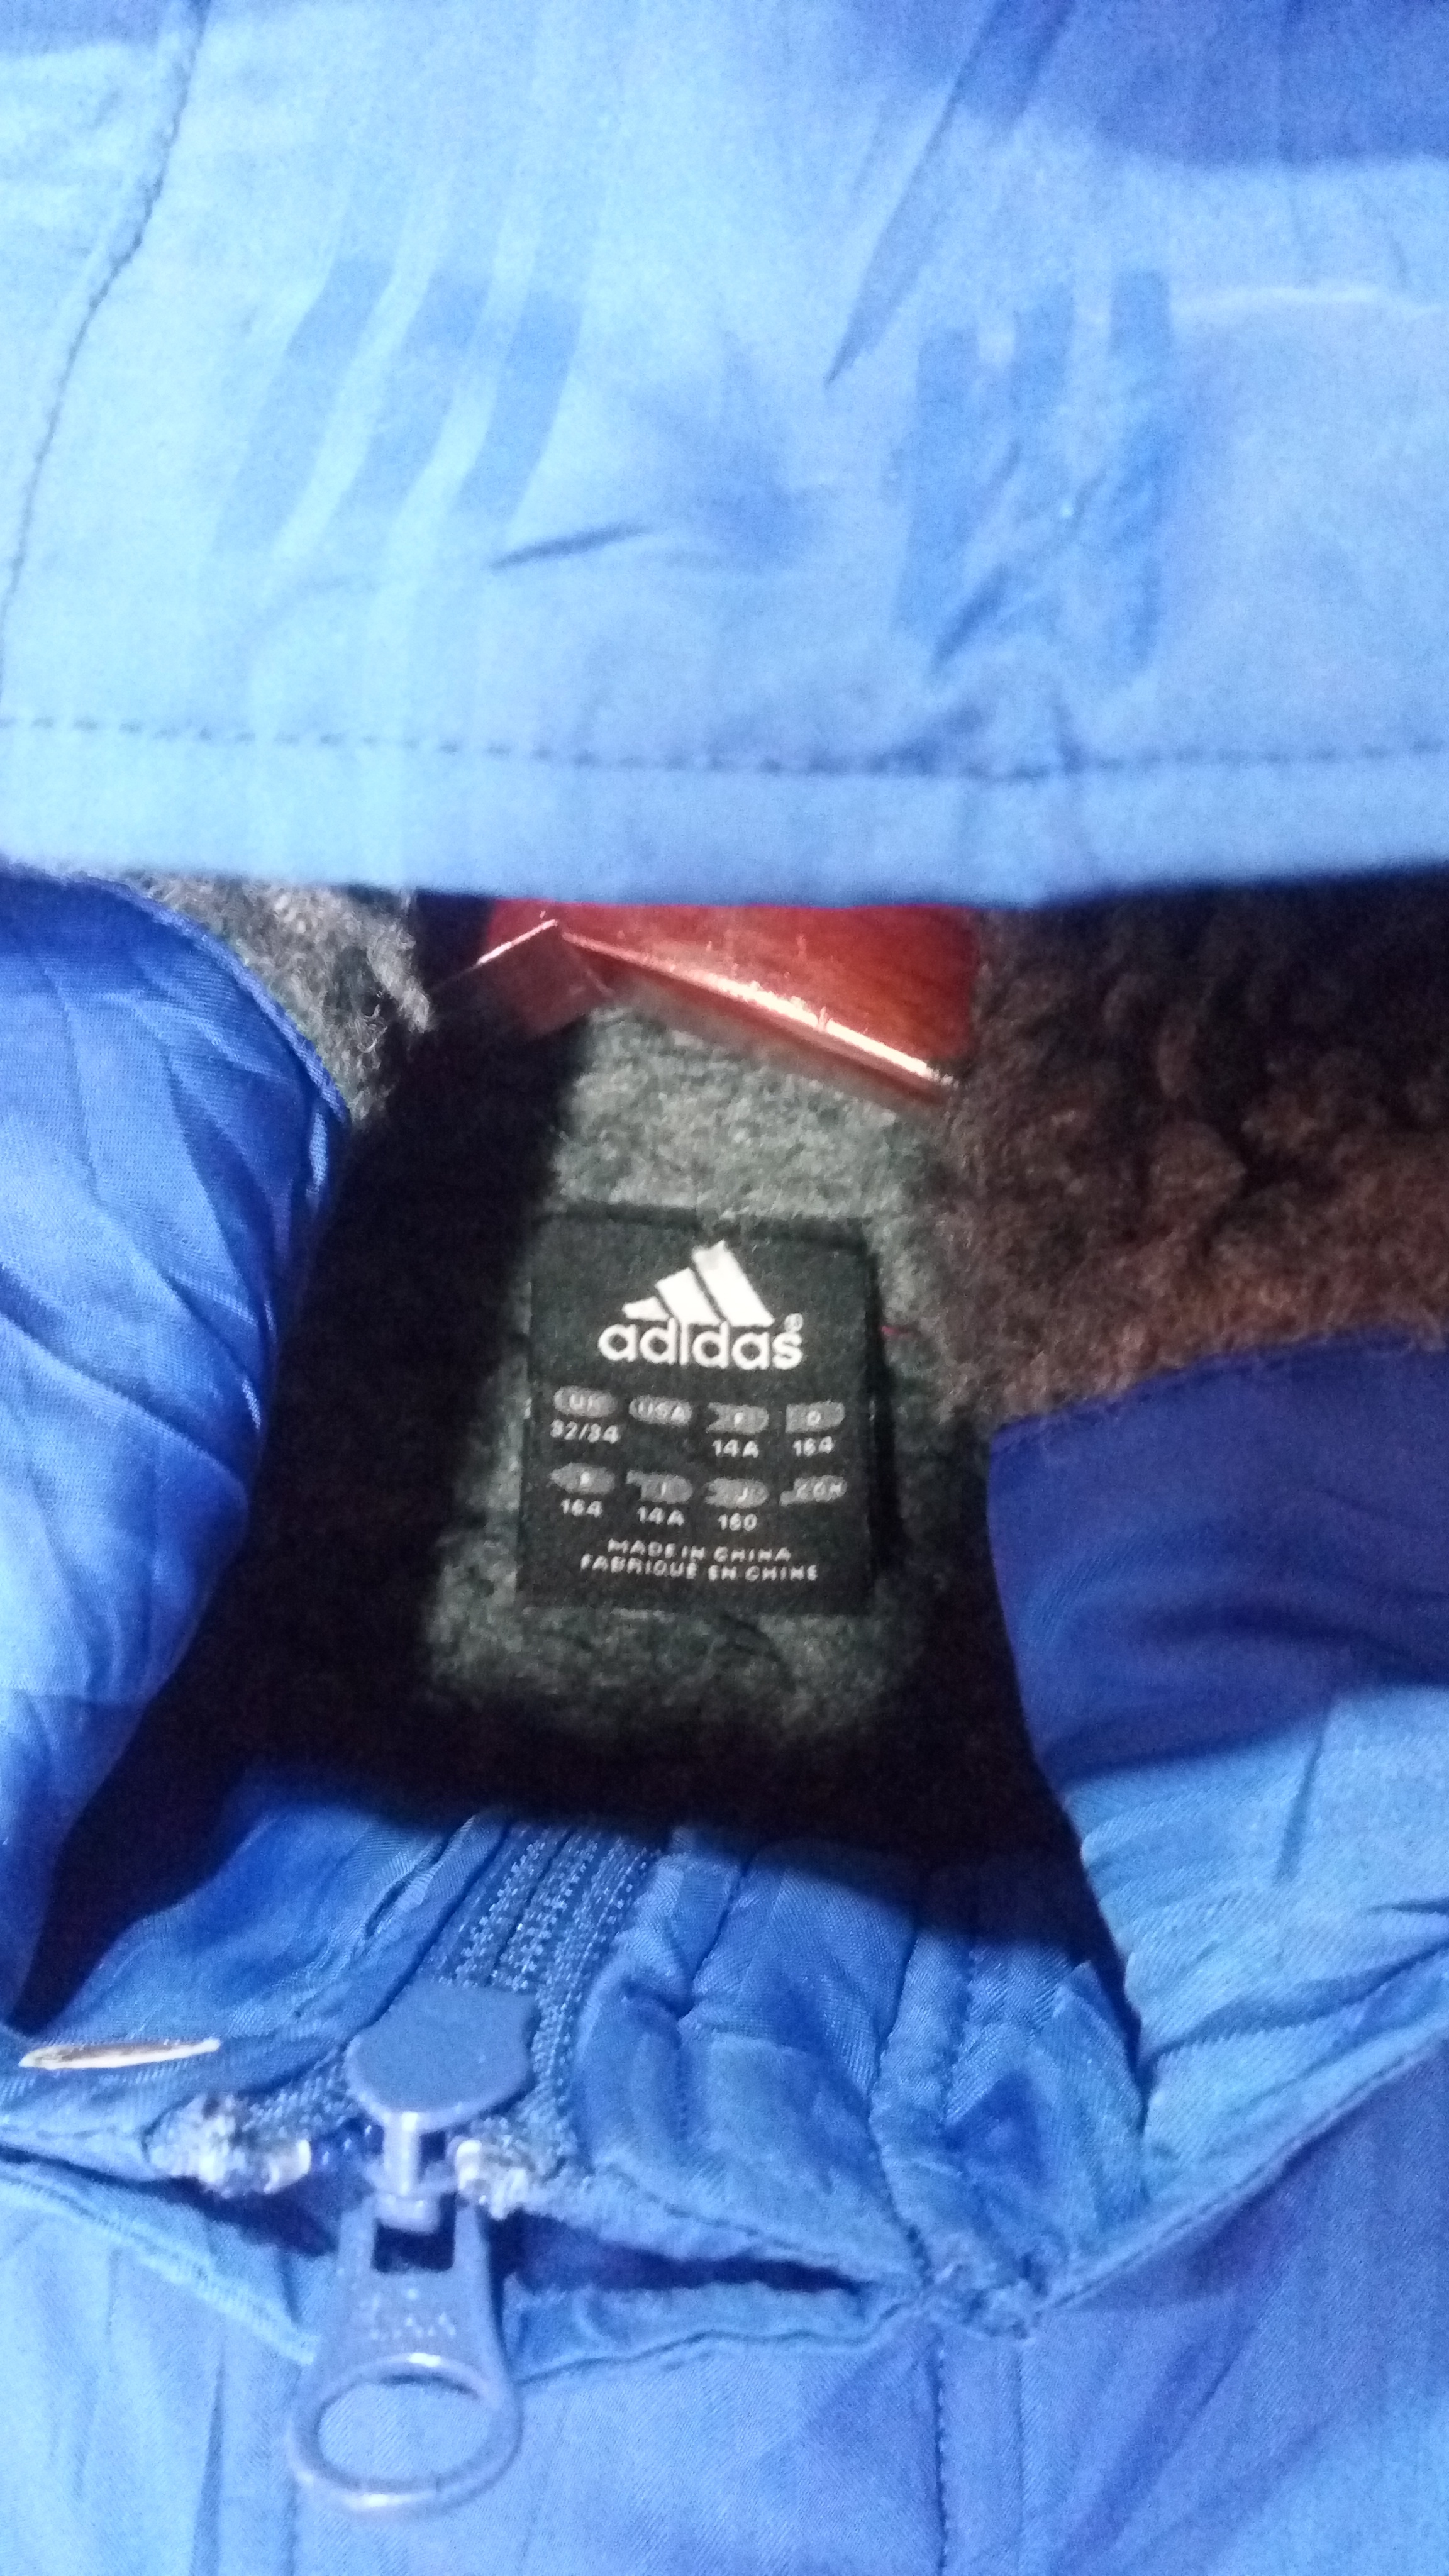 Adidas big logo sherpa inner lining long jacket hoodie parka winter size M/L - 5